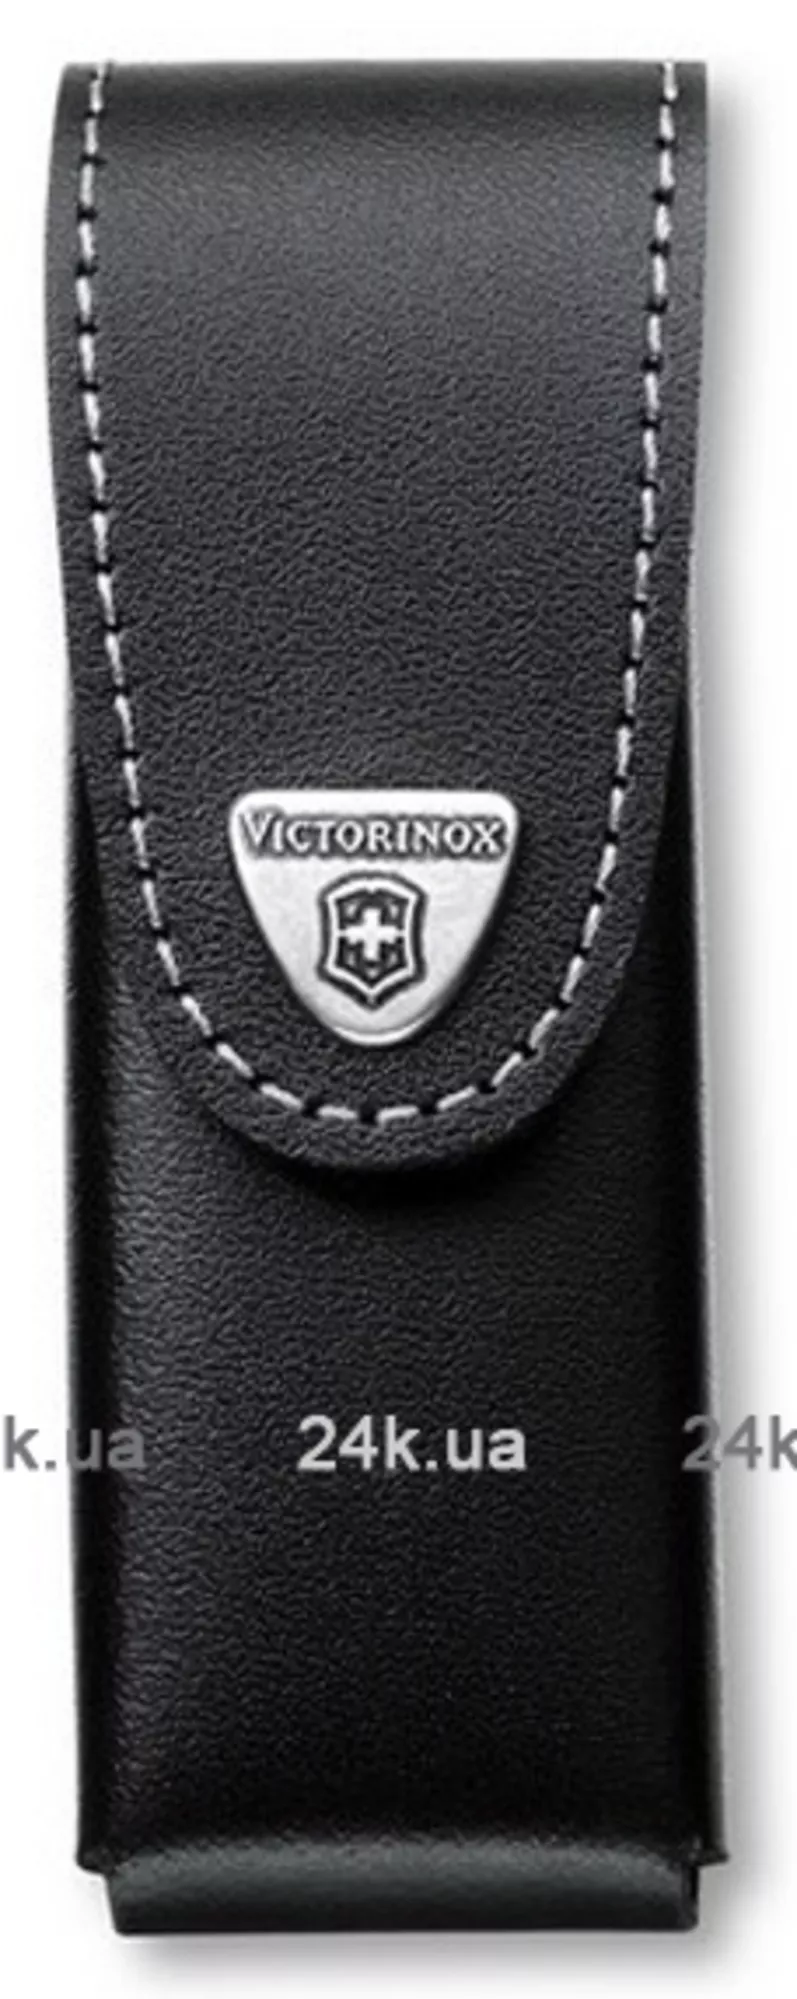 Чехол Victorinox Vx40523.3